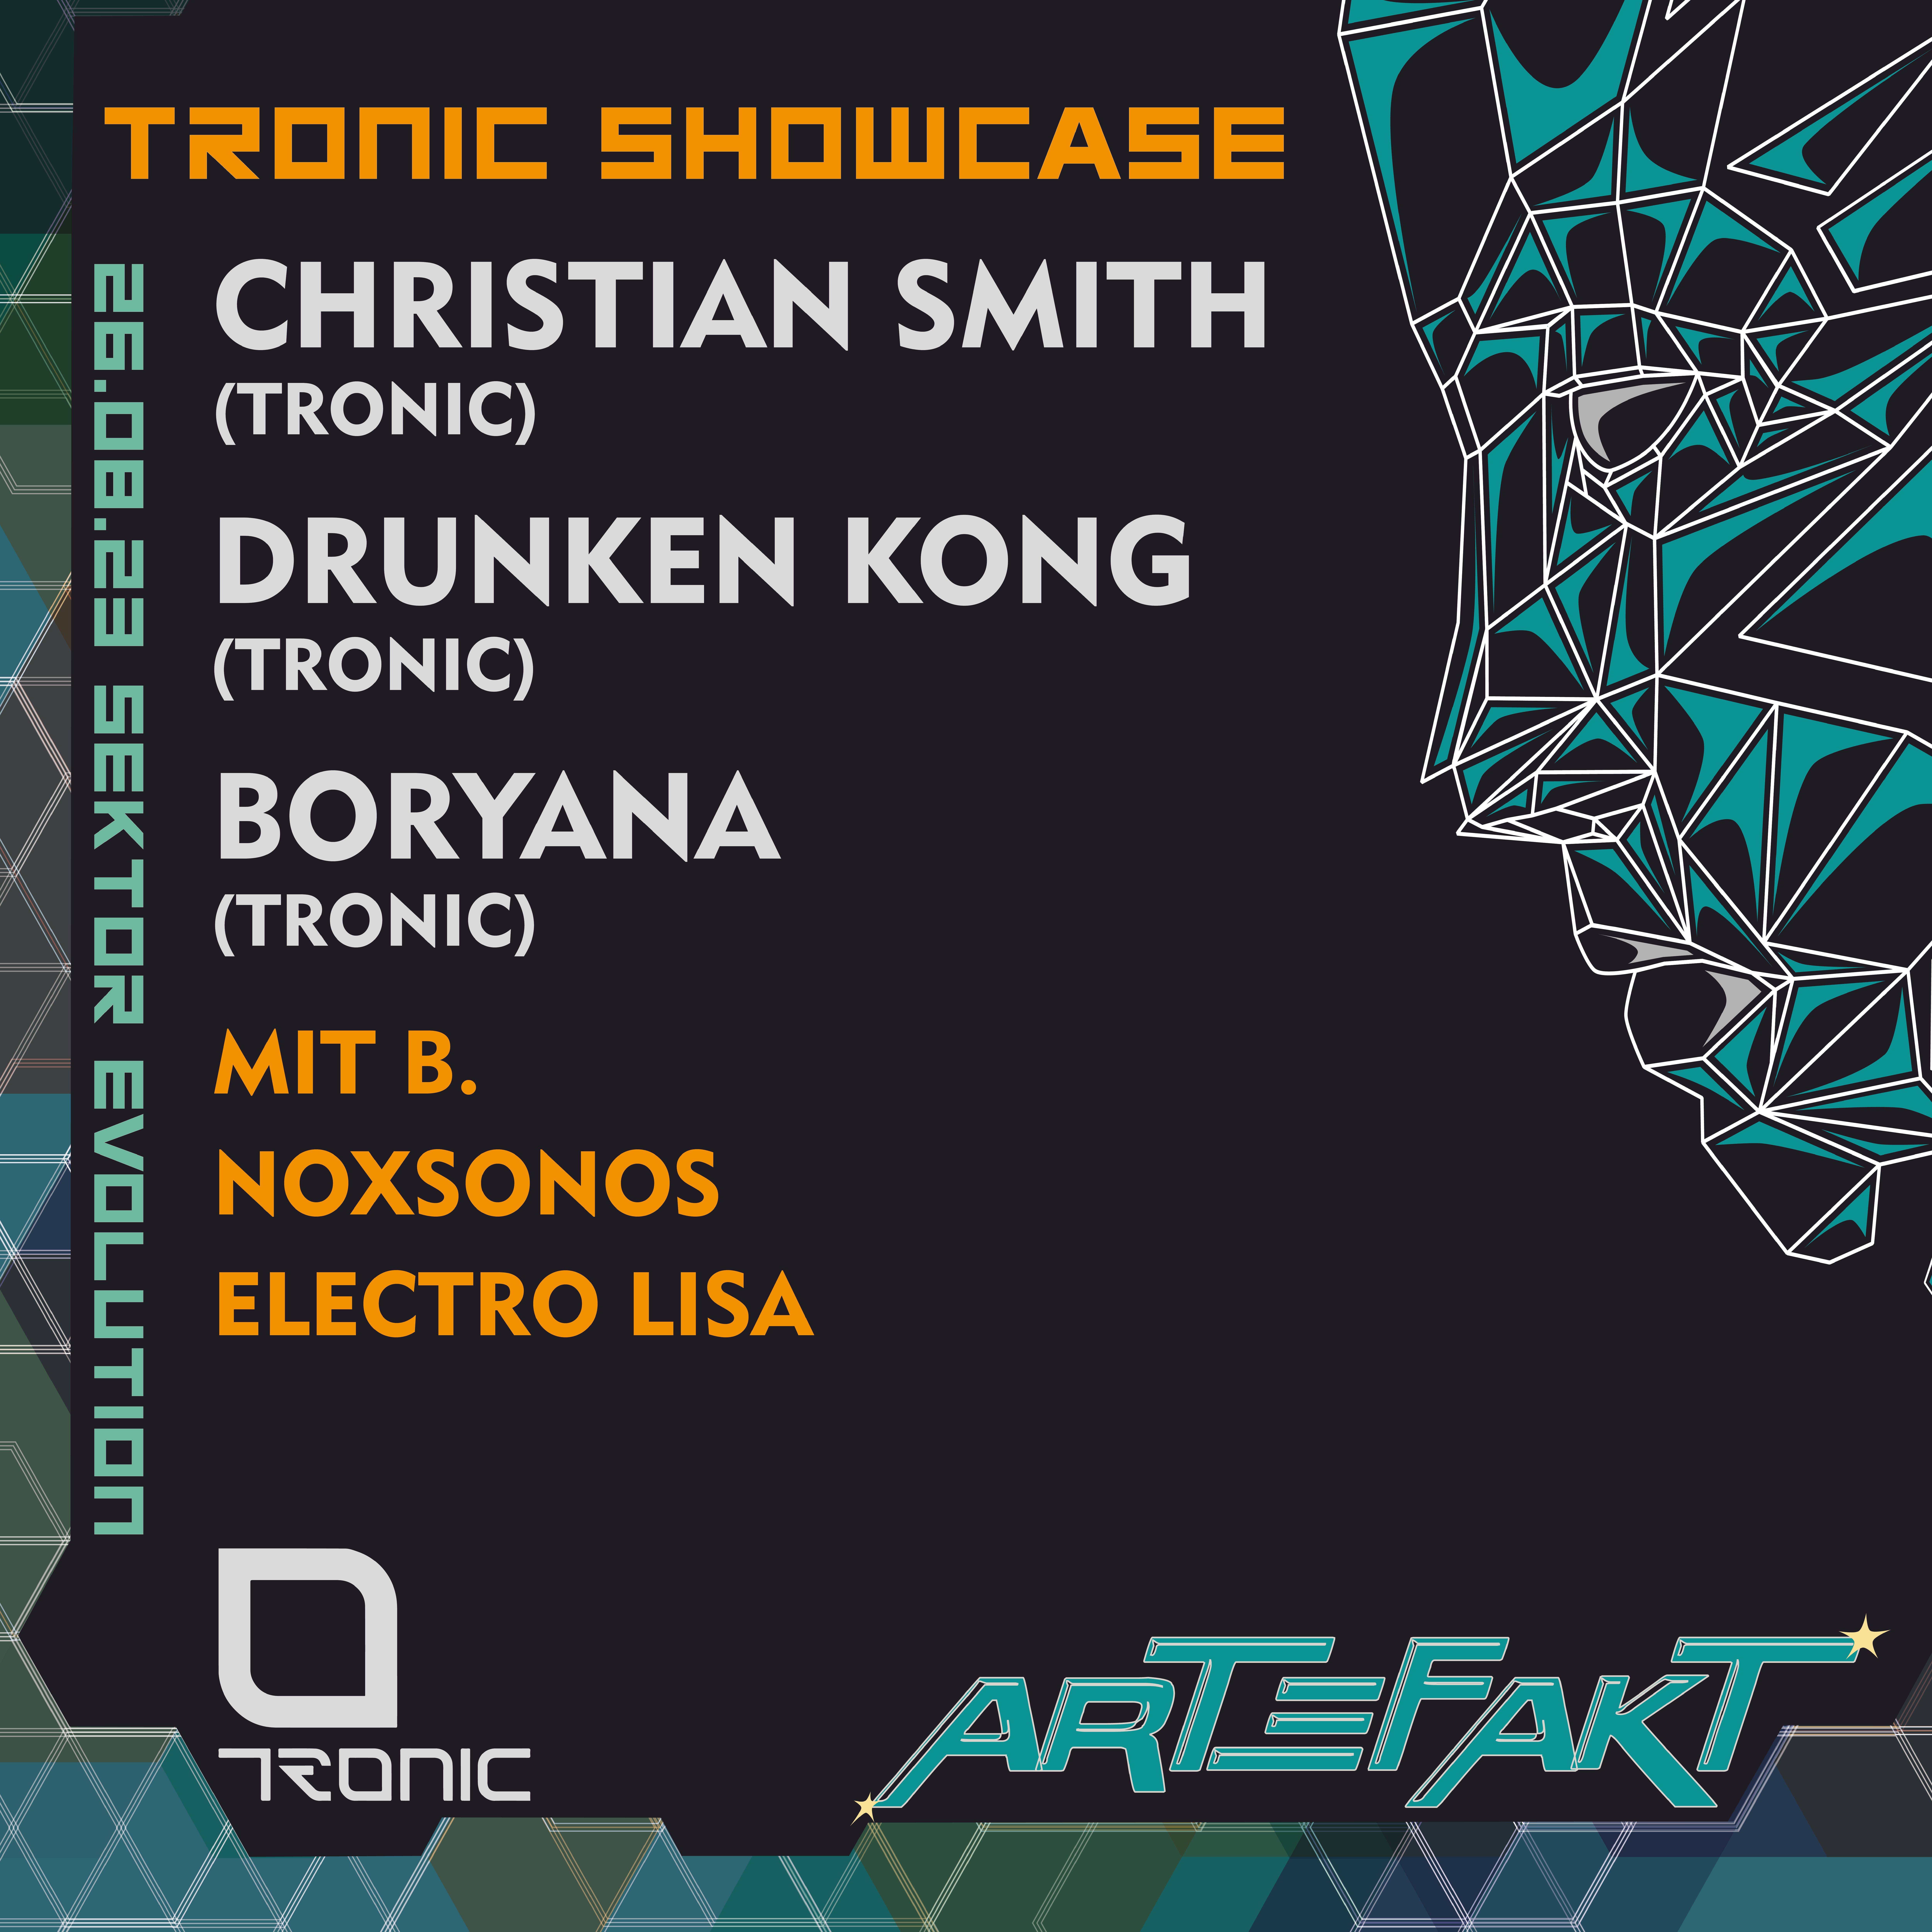 TRONIC Showcase X ARTEFAKT - フライヤー表